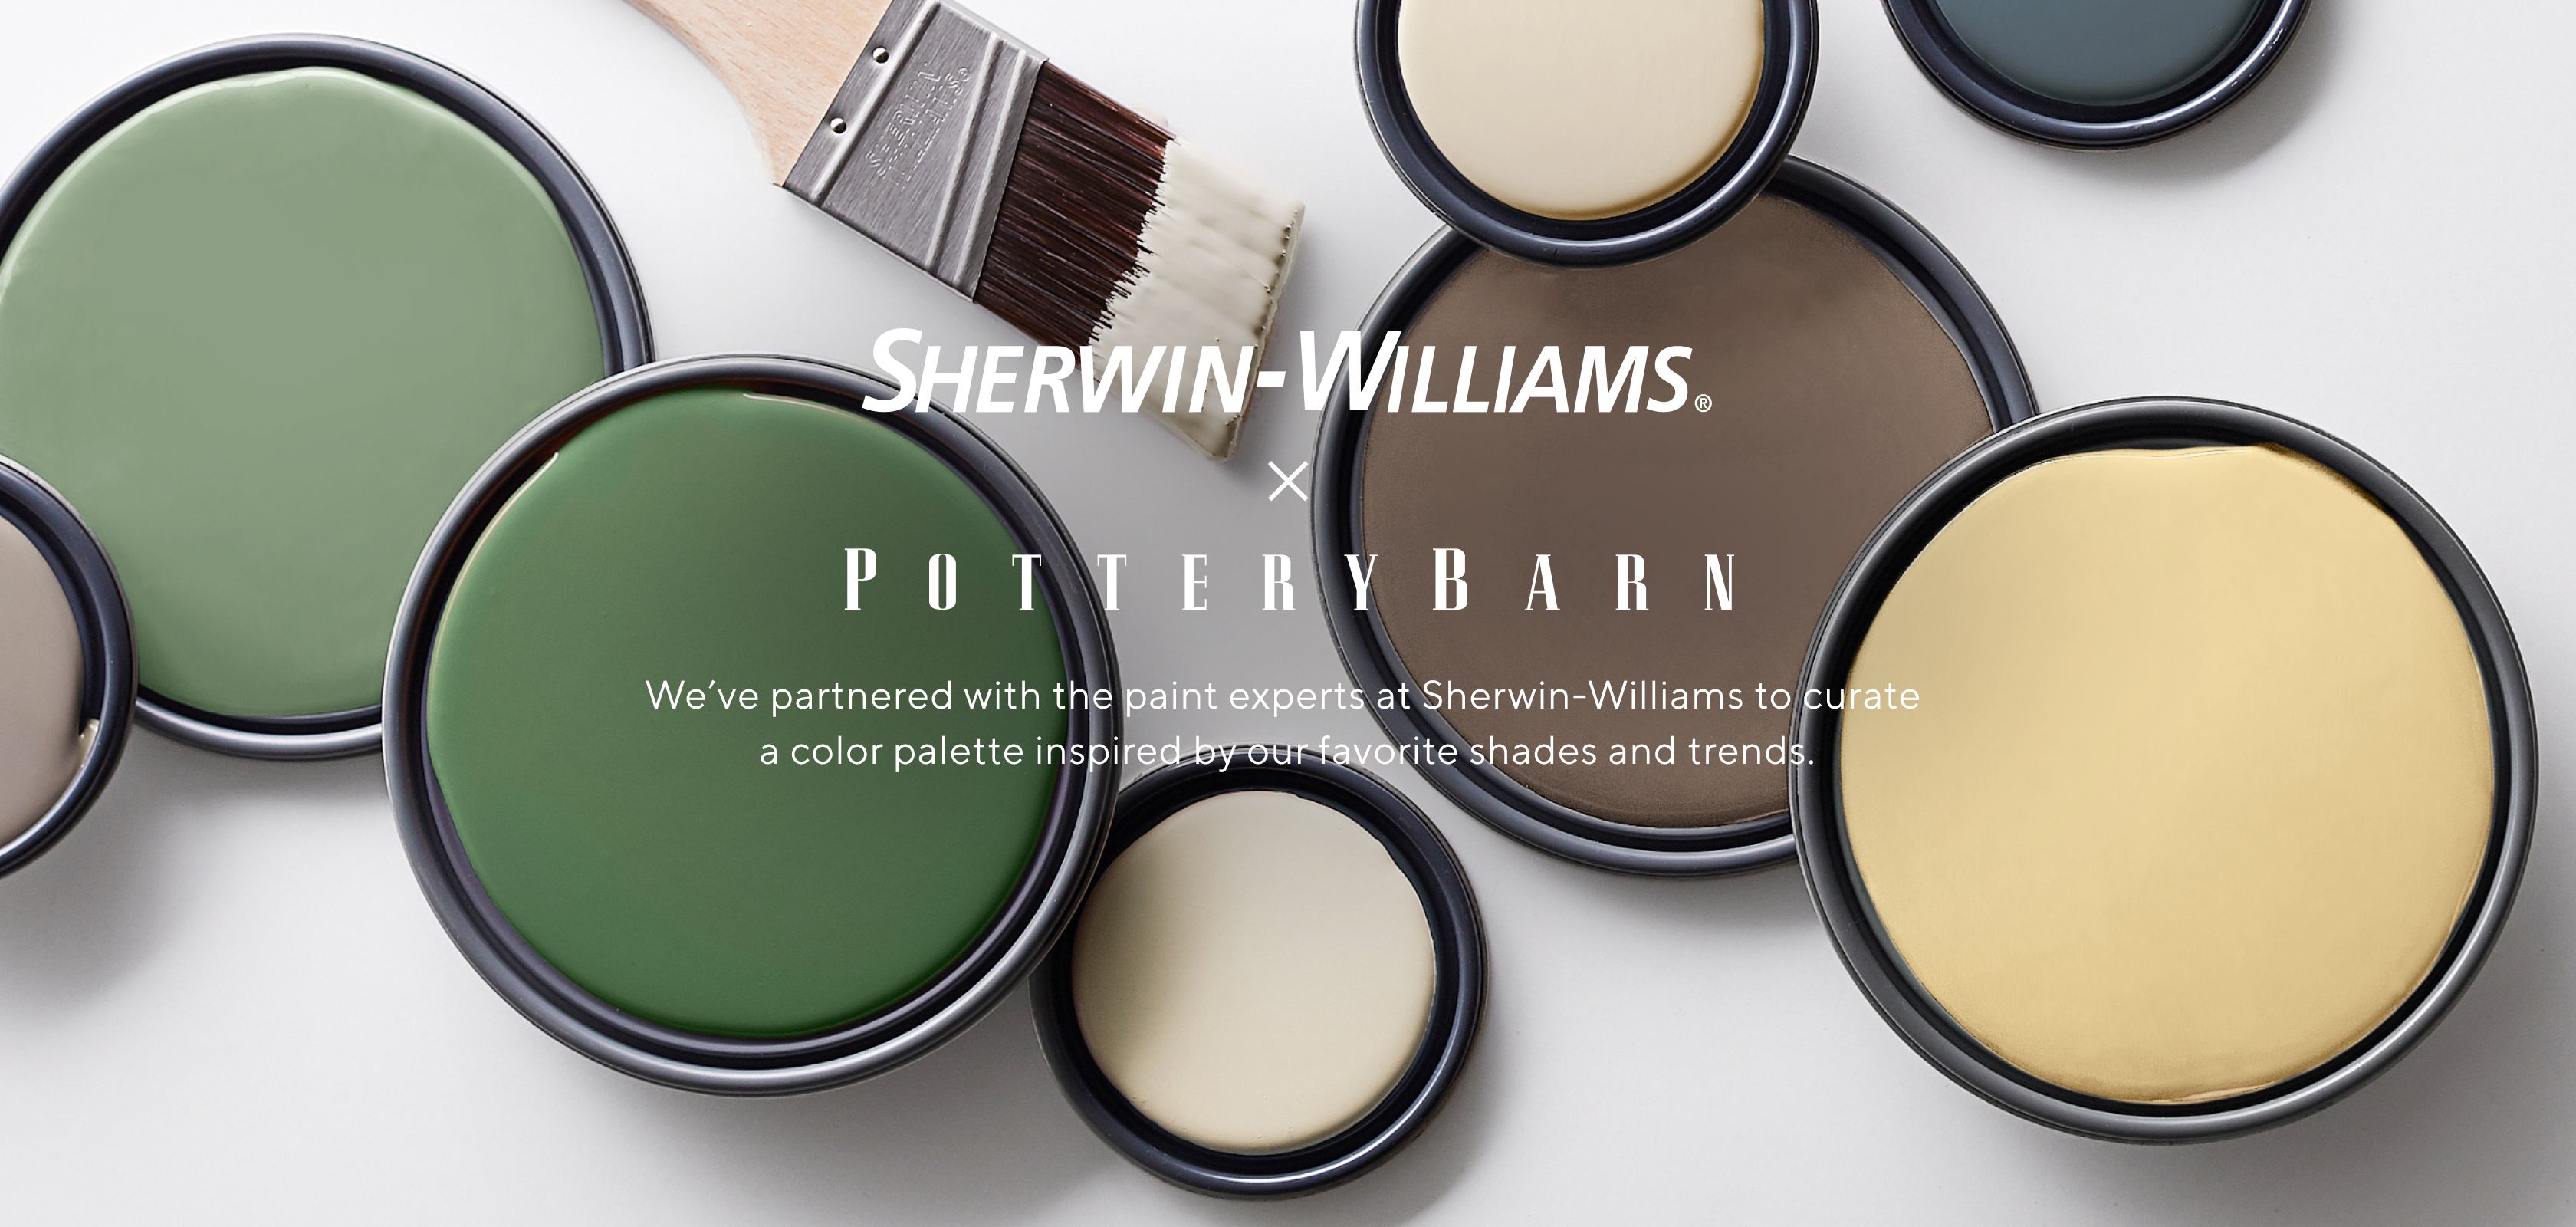 Sherwin-Williams x Pottery Barn